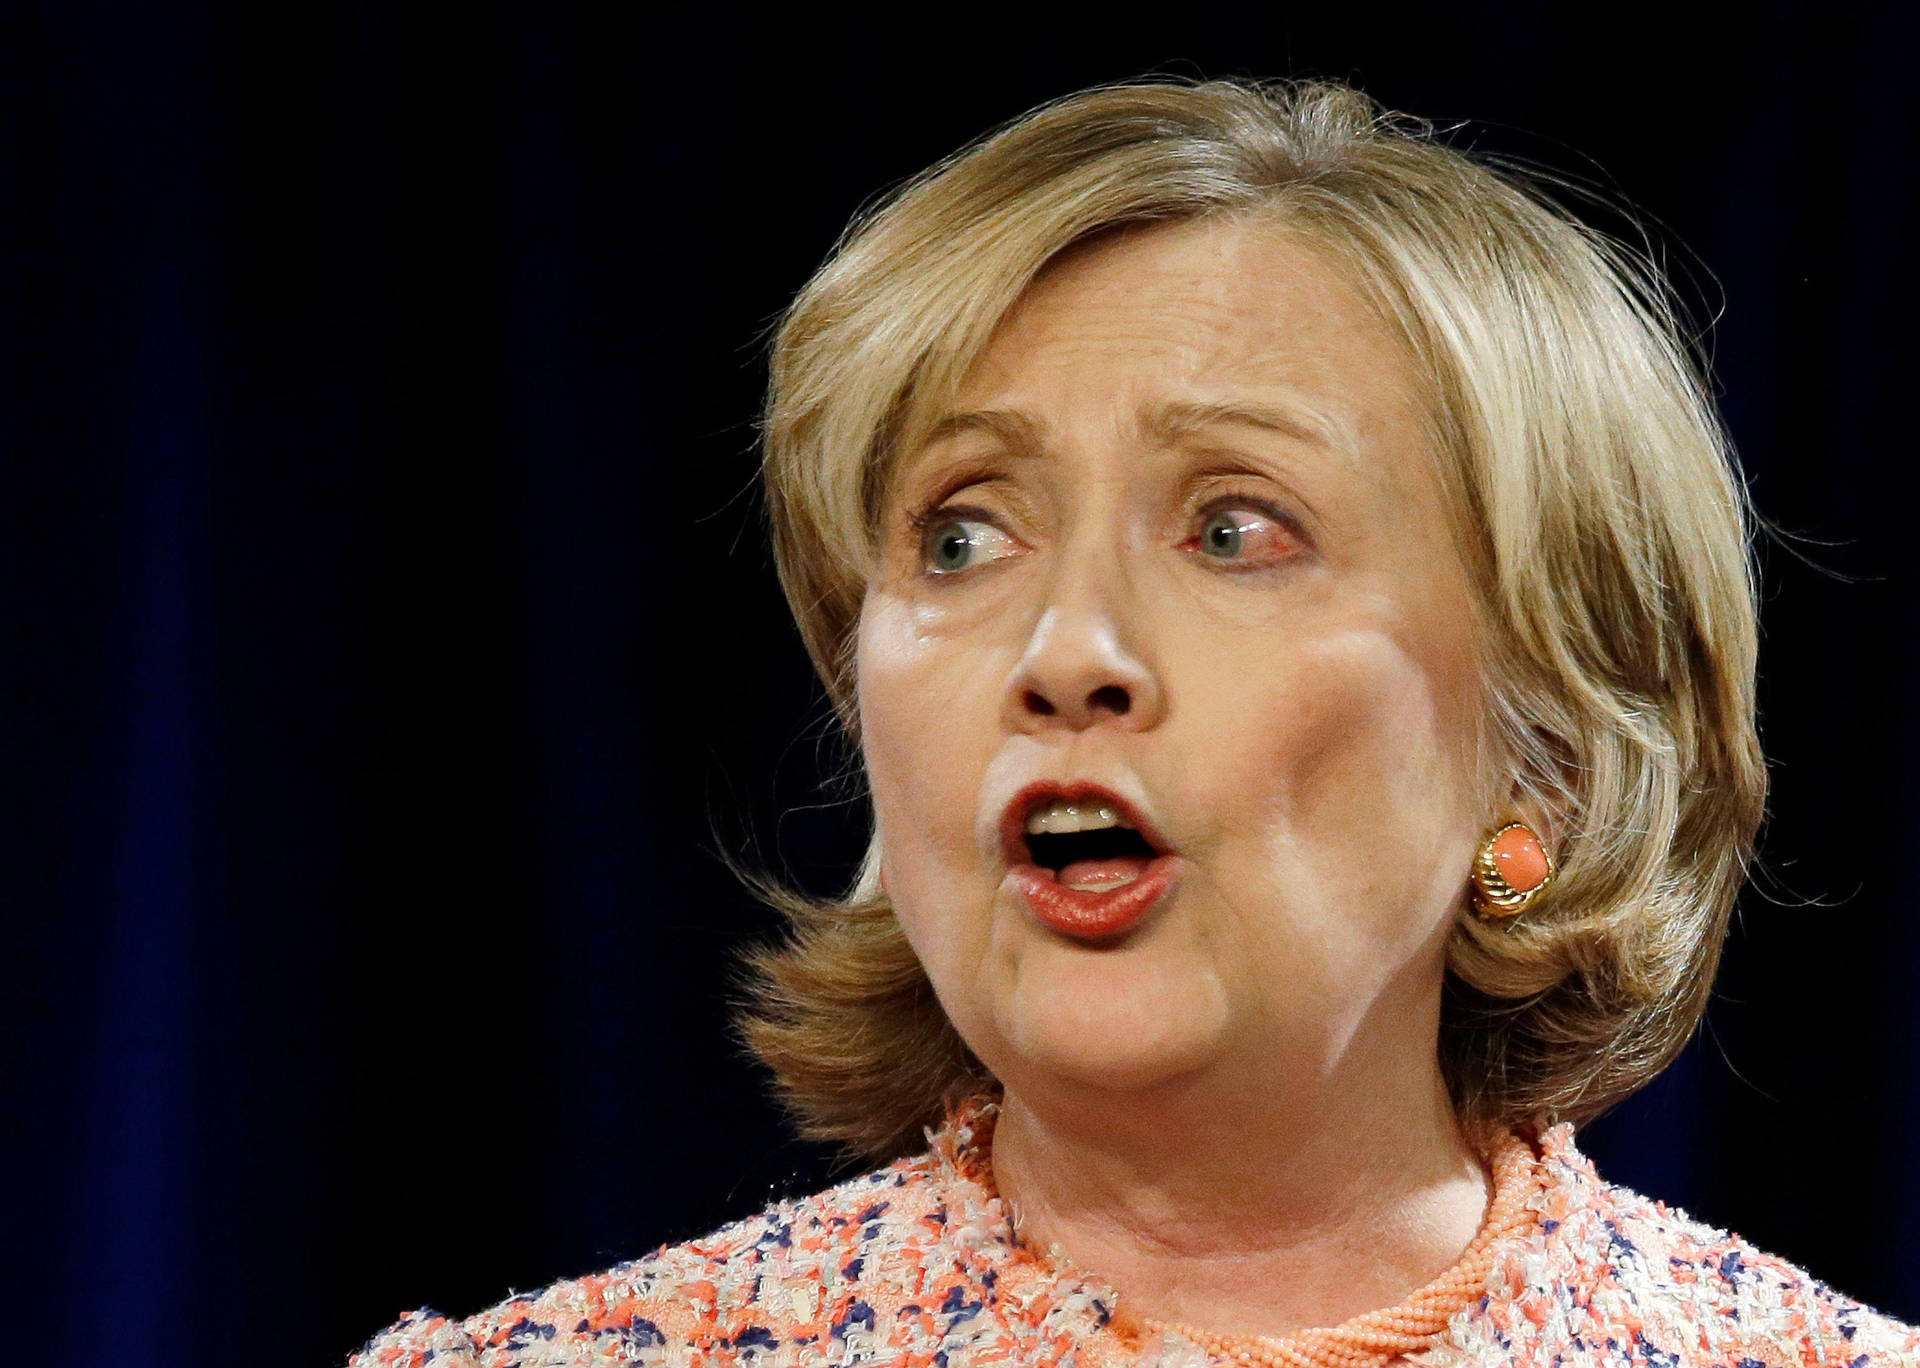 Hillary Clinton Shocked Face Wallpaper